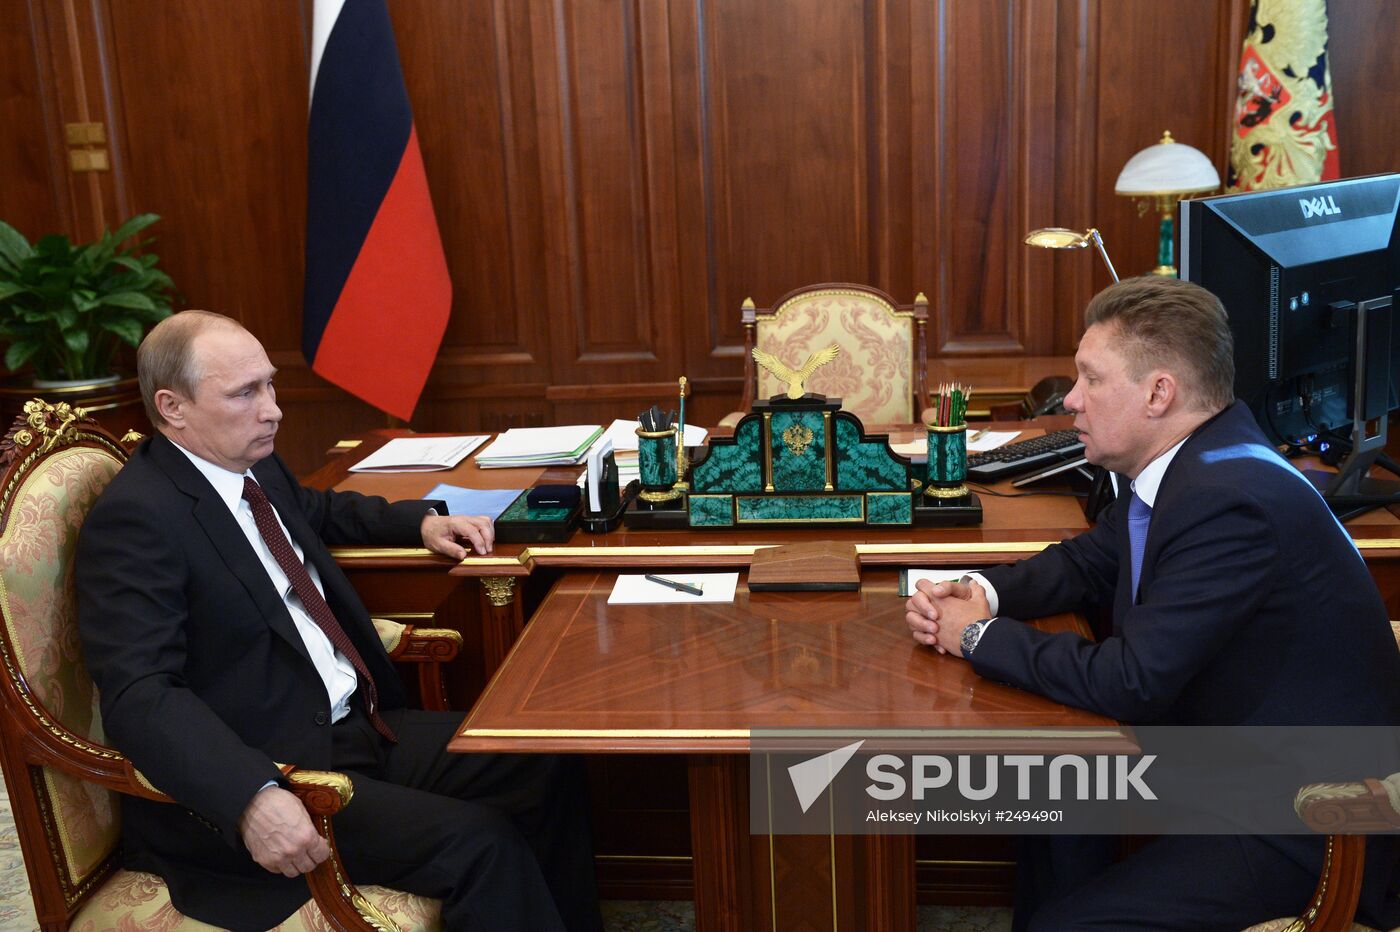 Vladimir Putin meets with Alexei Miller